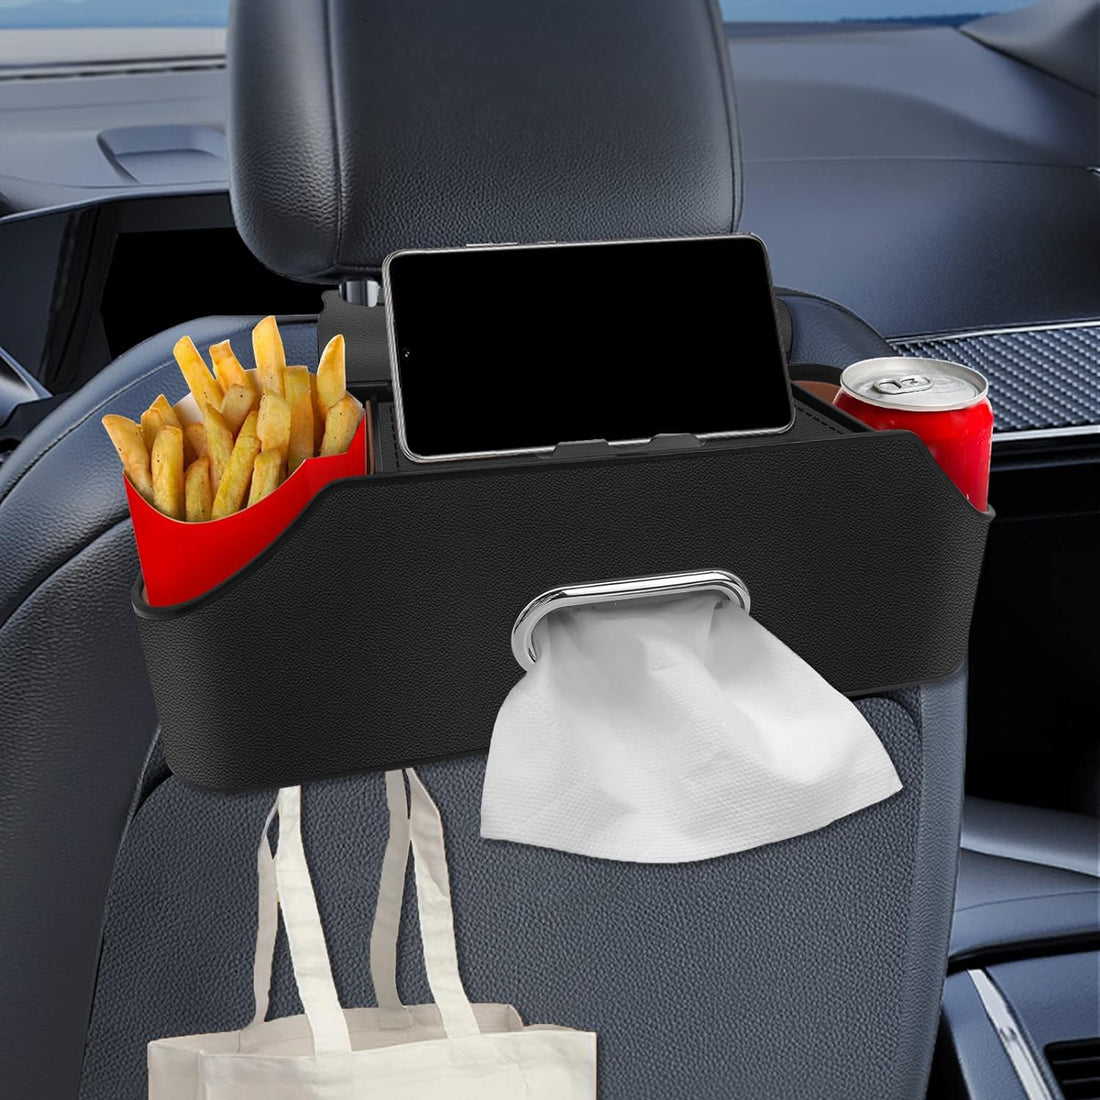 Car Headrest Backseat Organizer,Seat Back Organizer,Hook,Cup Holder,Tissue Box,Phone Holder,Storage Box,Multifunctional Storage for Car Travel Accessories(Black)